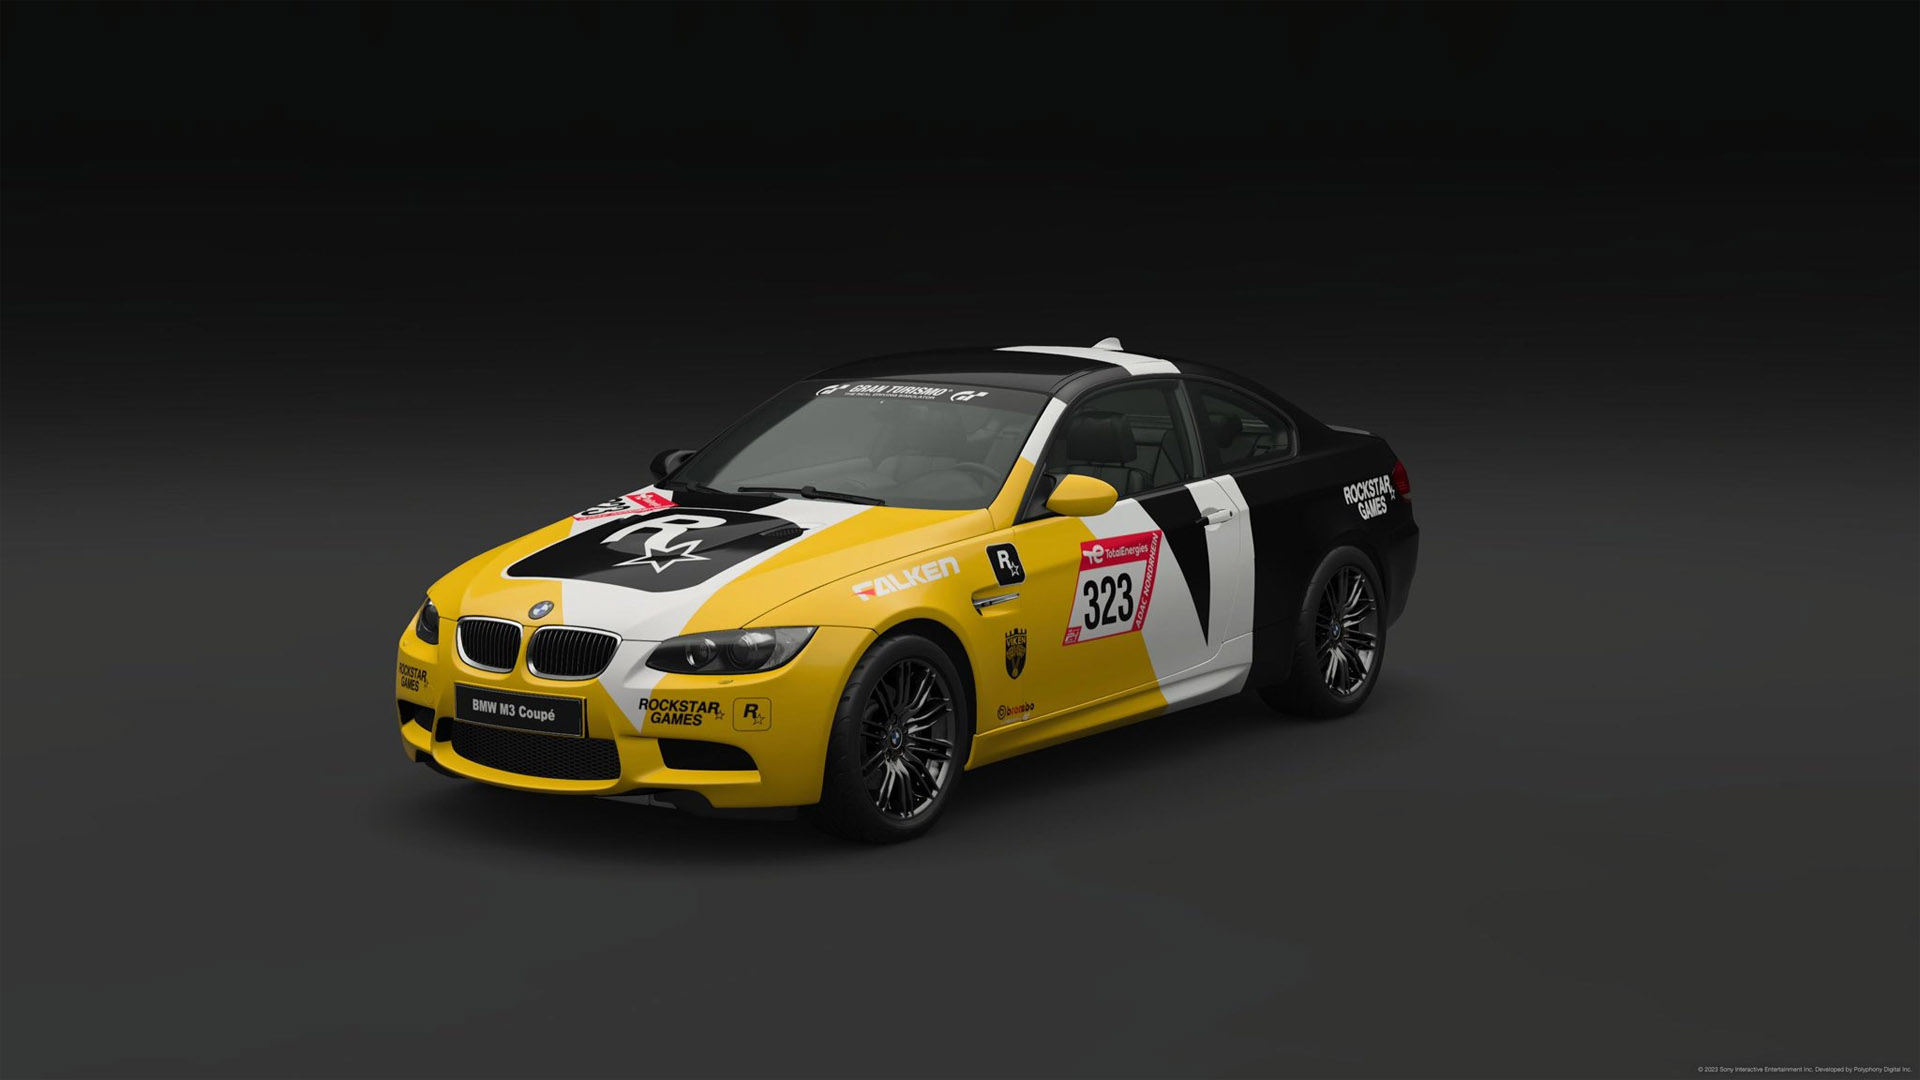 Rockstar Racing BMW M3 Gran Turismo 7